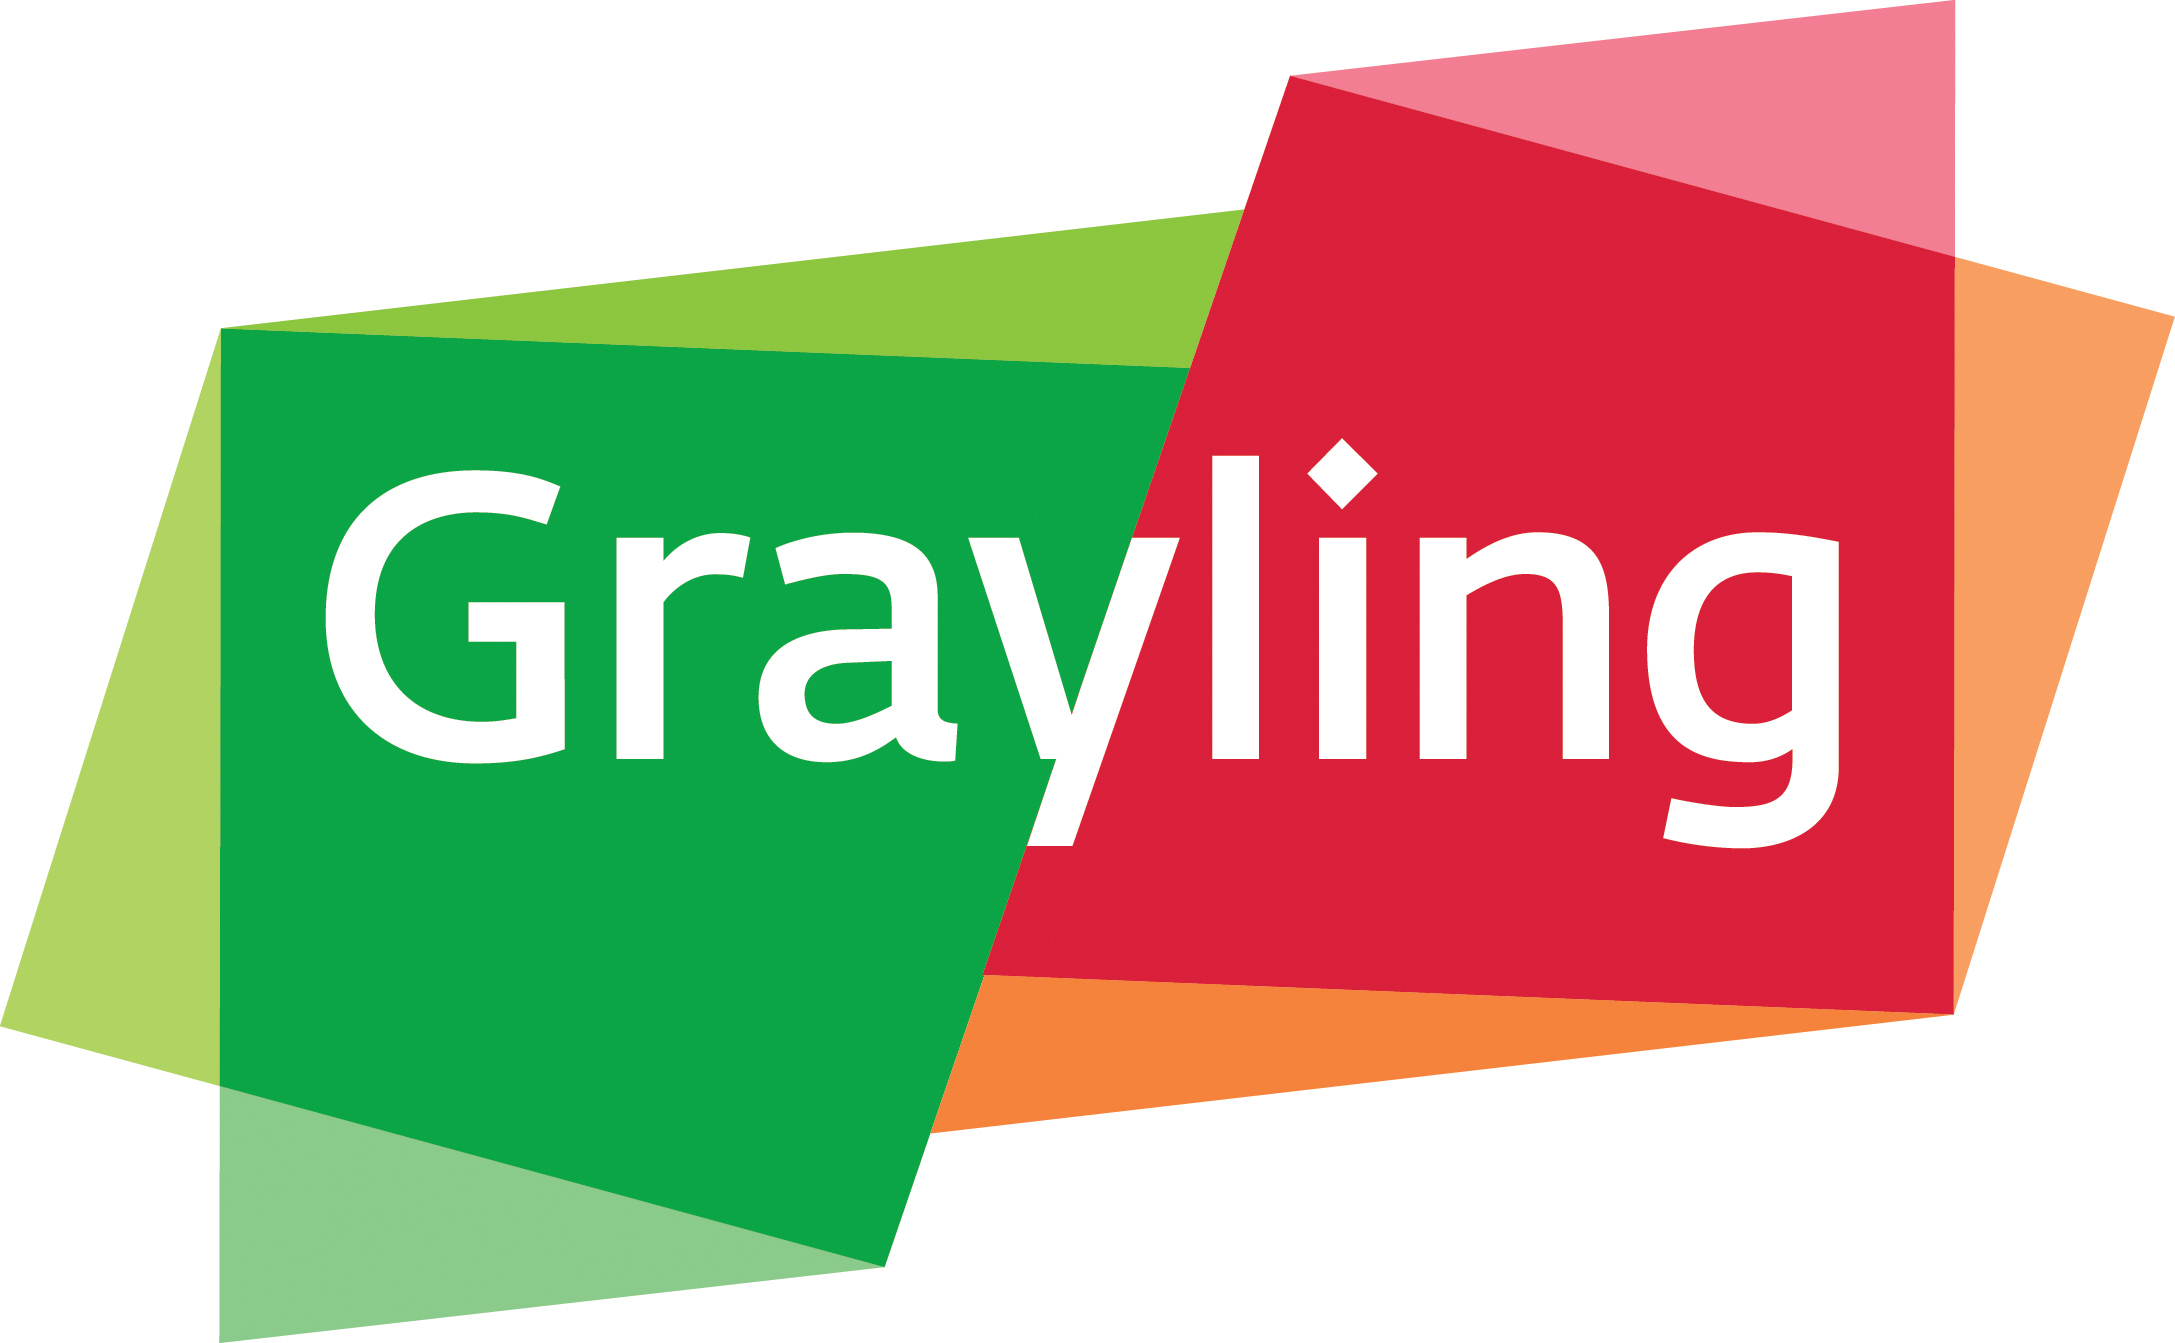  Best Public Relations Firm Logo: Grayling